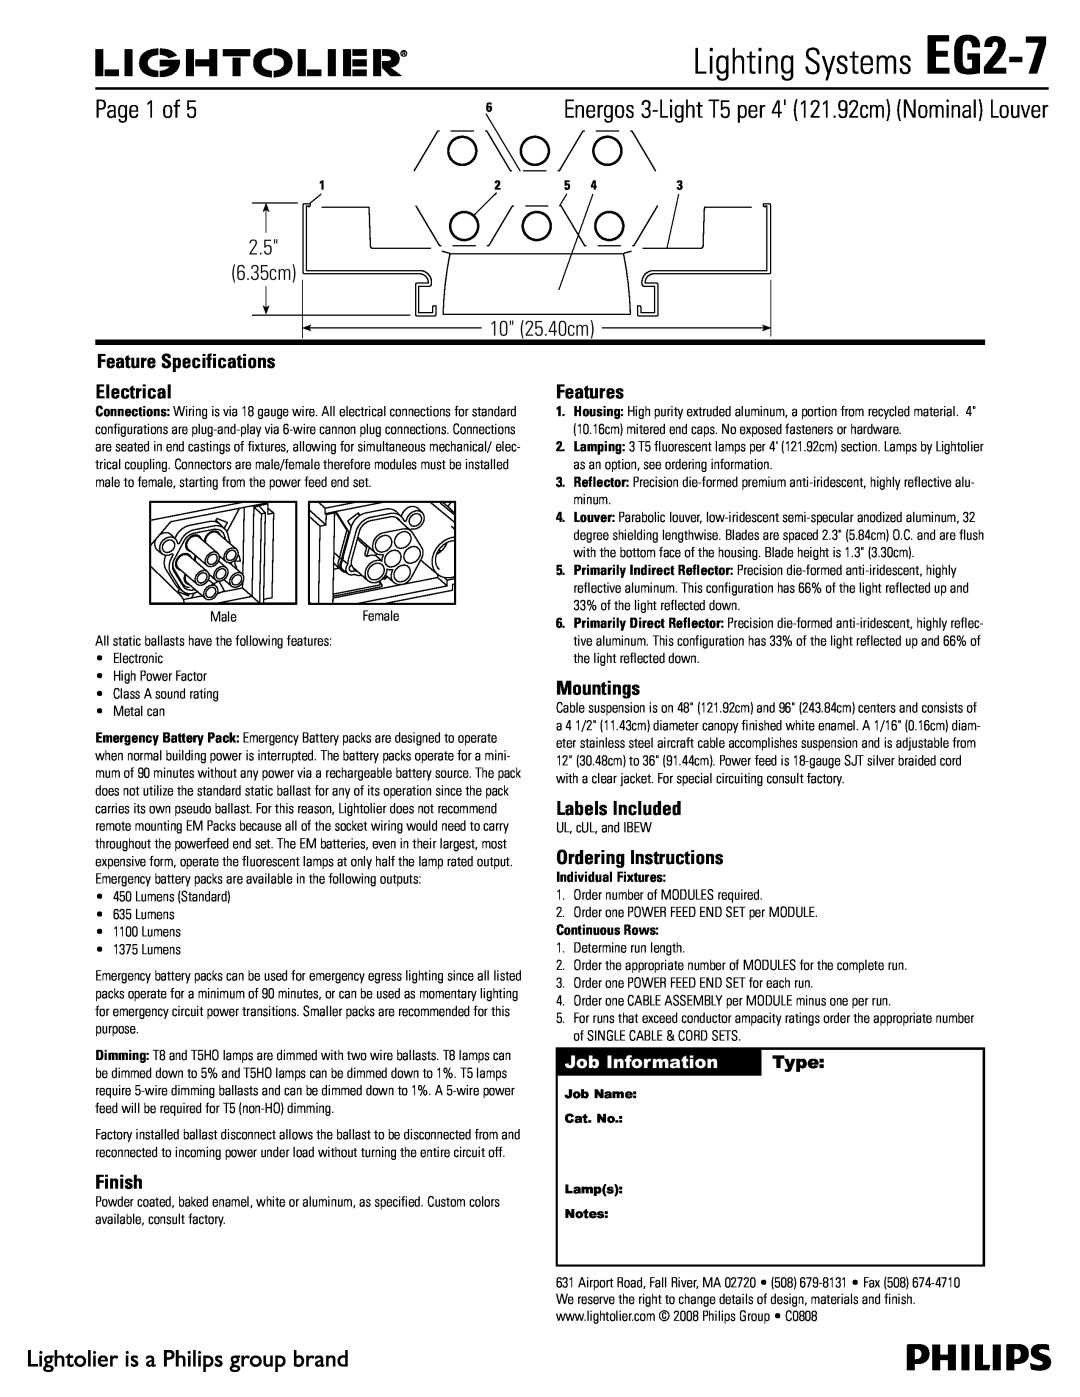 Lightolier specifications Lighting Systems EG2-7, 1BHFPG,  Dn  Dn, Job Information, Type 